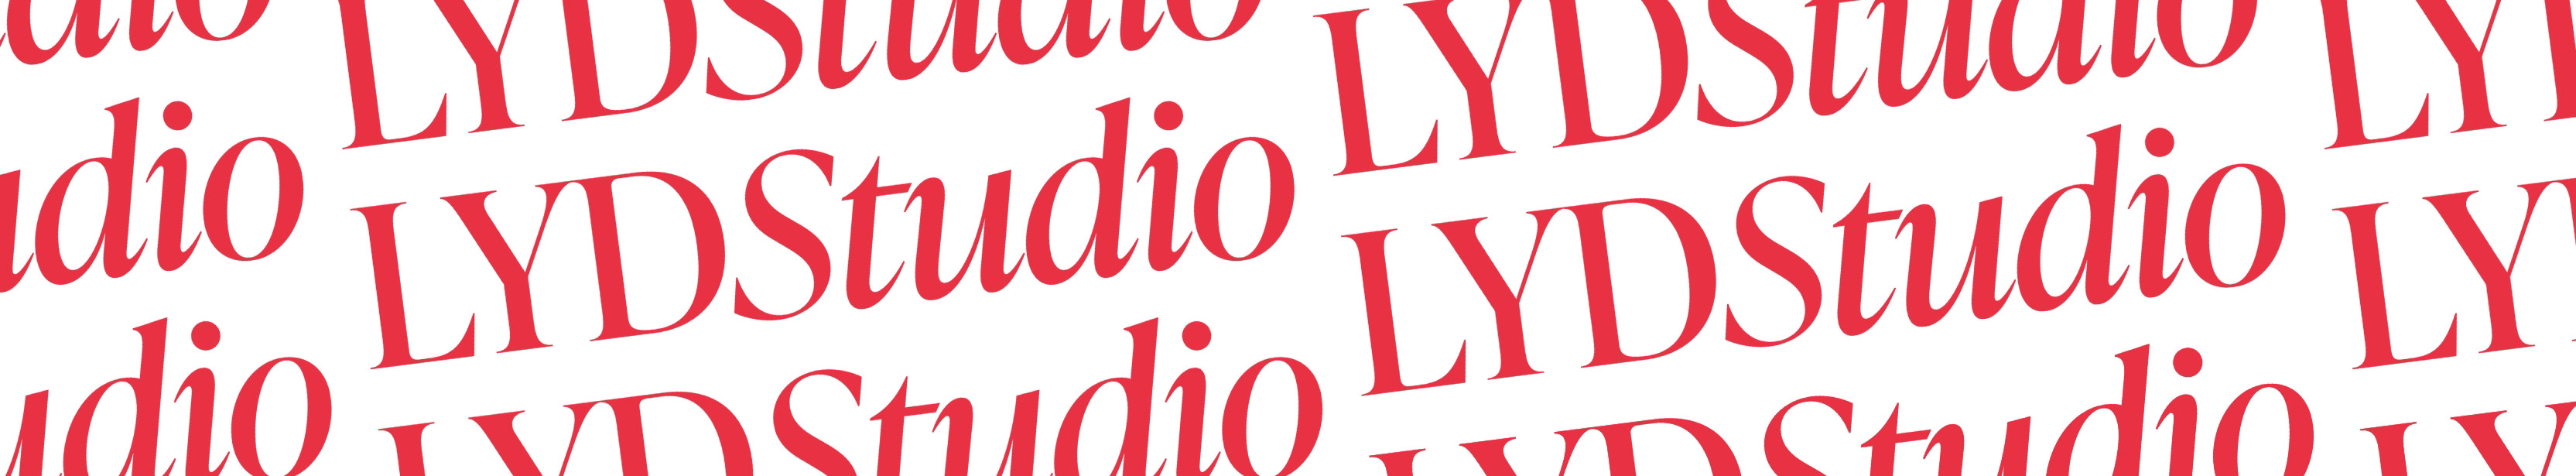 LYD Studio's profile banner